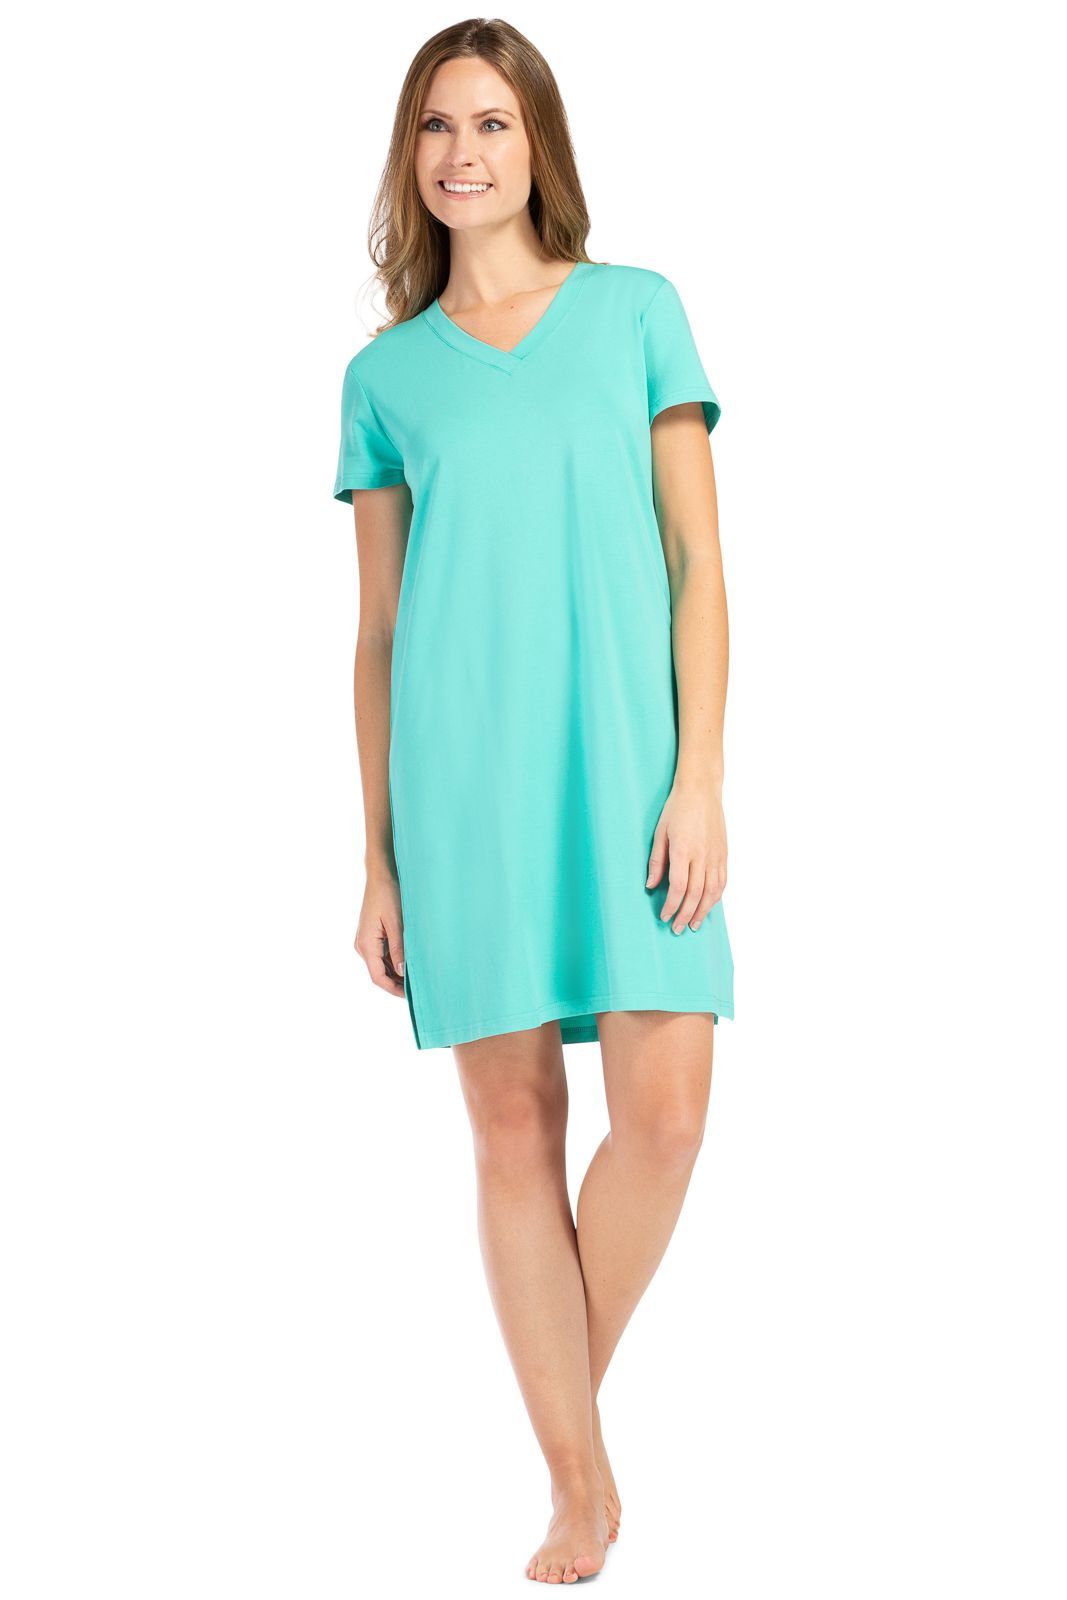  Nightgown For Women Sleep Shirt Short Sleeve